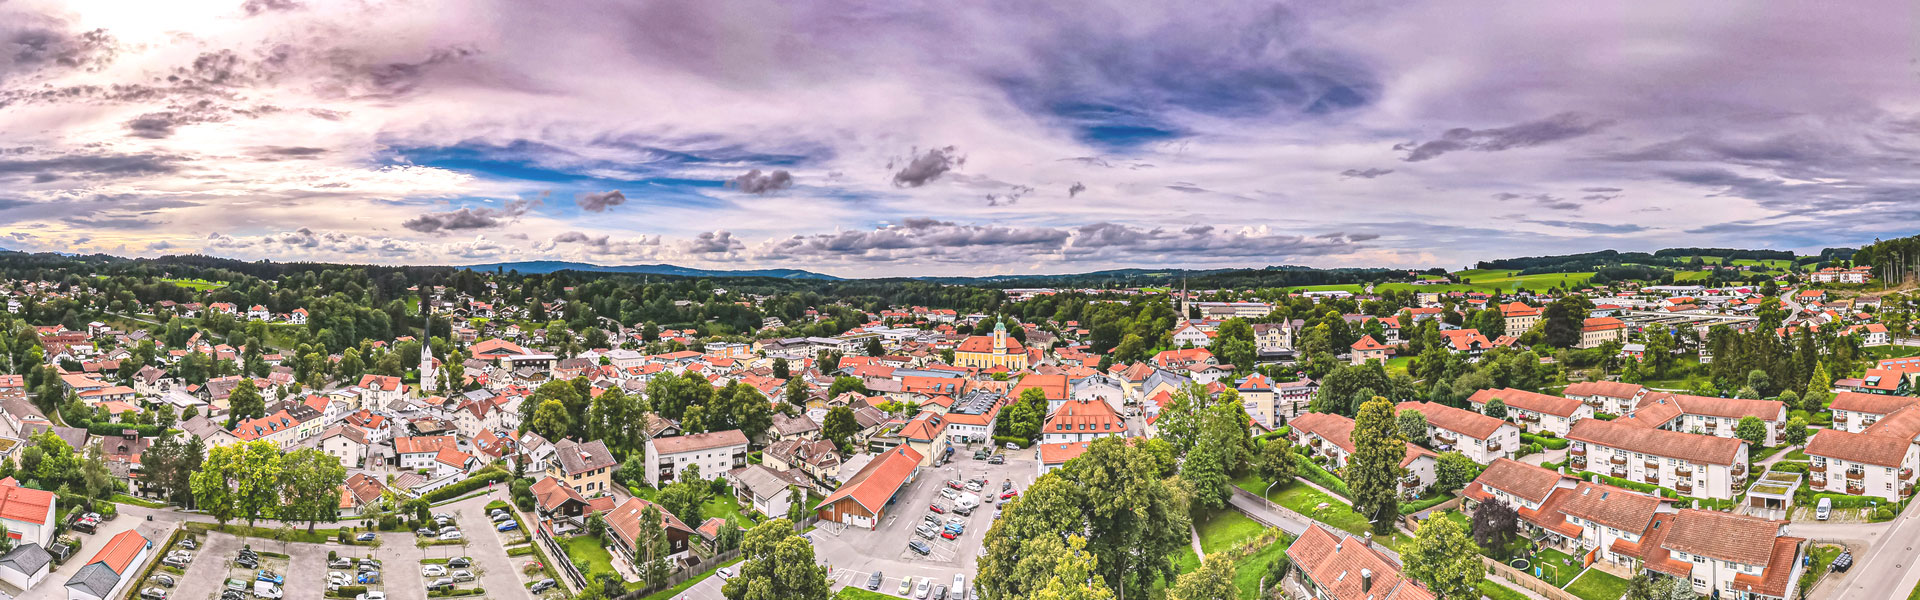 Stadt Miesbach – Header_Drohnenbild_Miesbach_2020